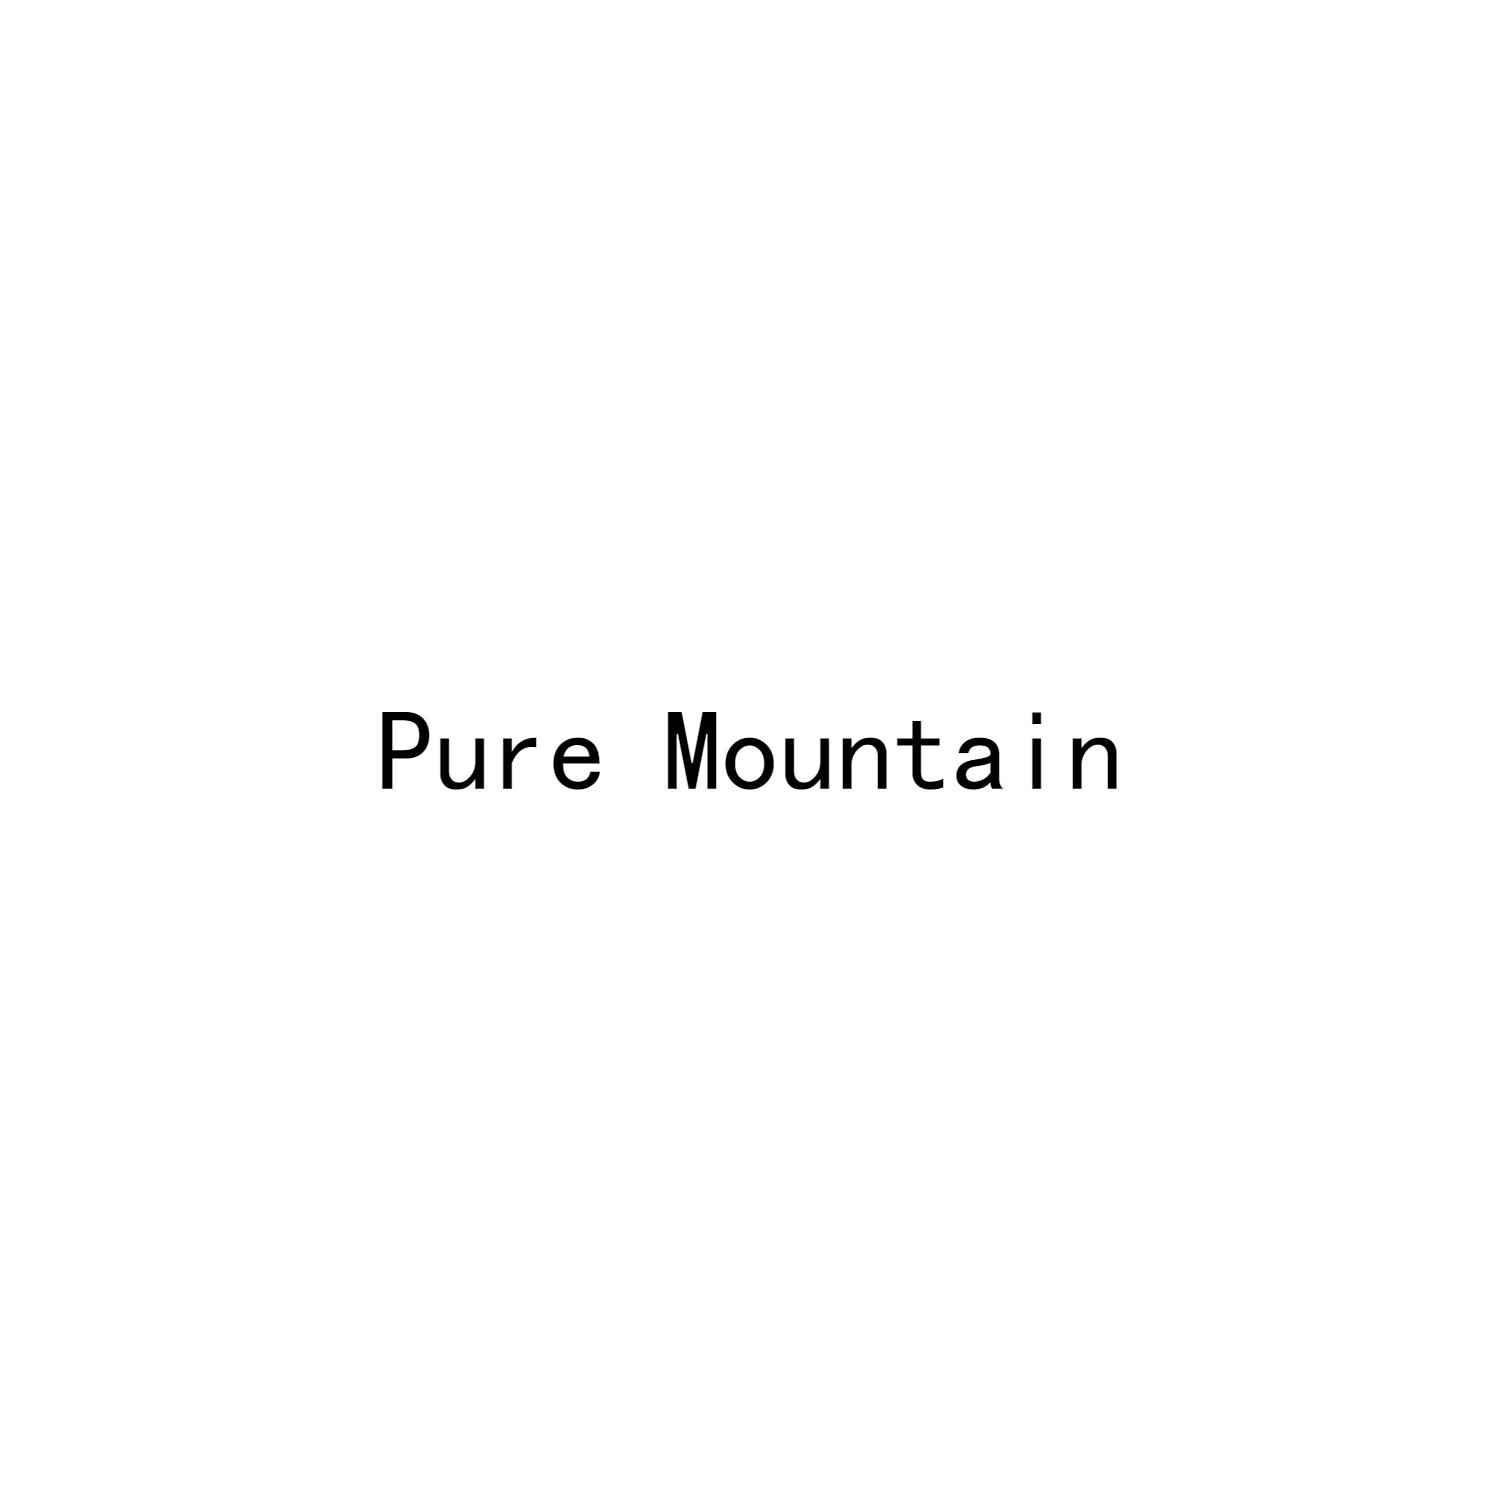 PURE MOUNTAIN